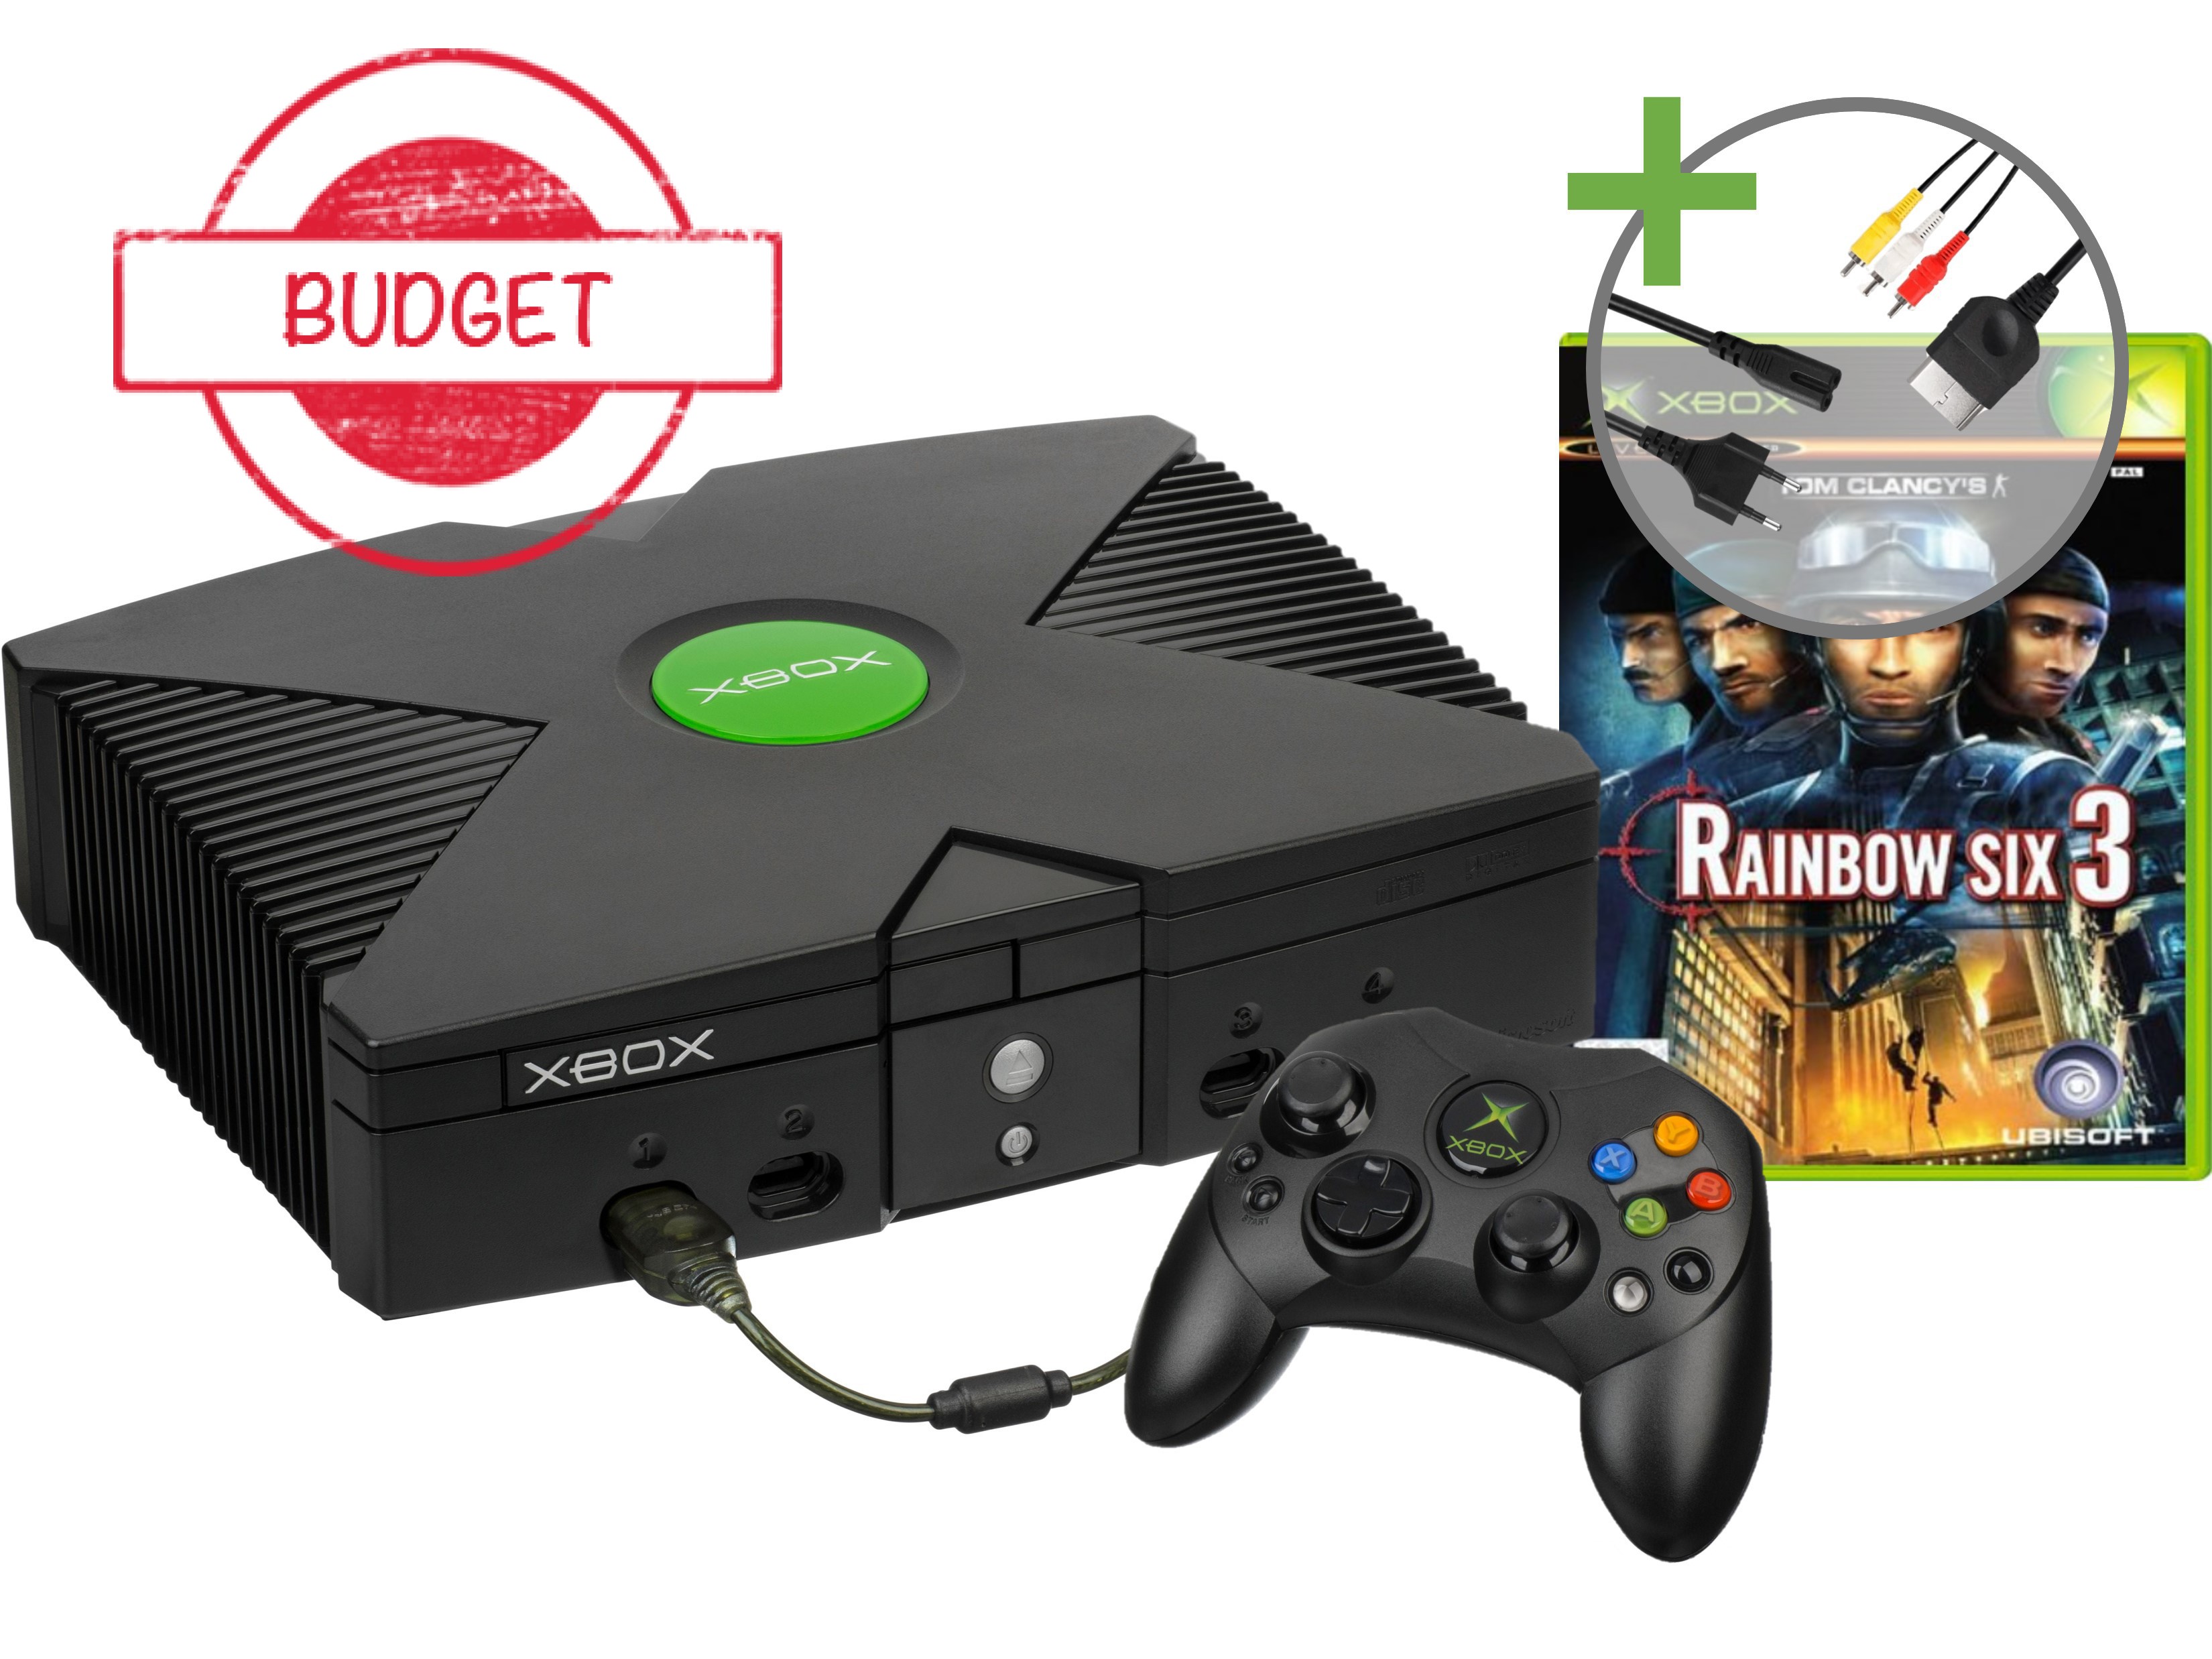 Microsoft Xbox Classic Starter Pack - Rainbow Six 3 Edition - Budget Kopen | Xbox Original Hardware